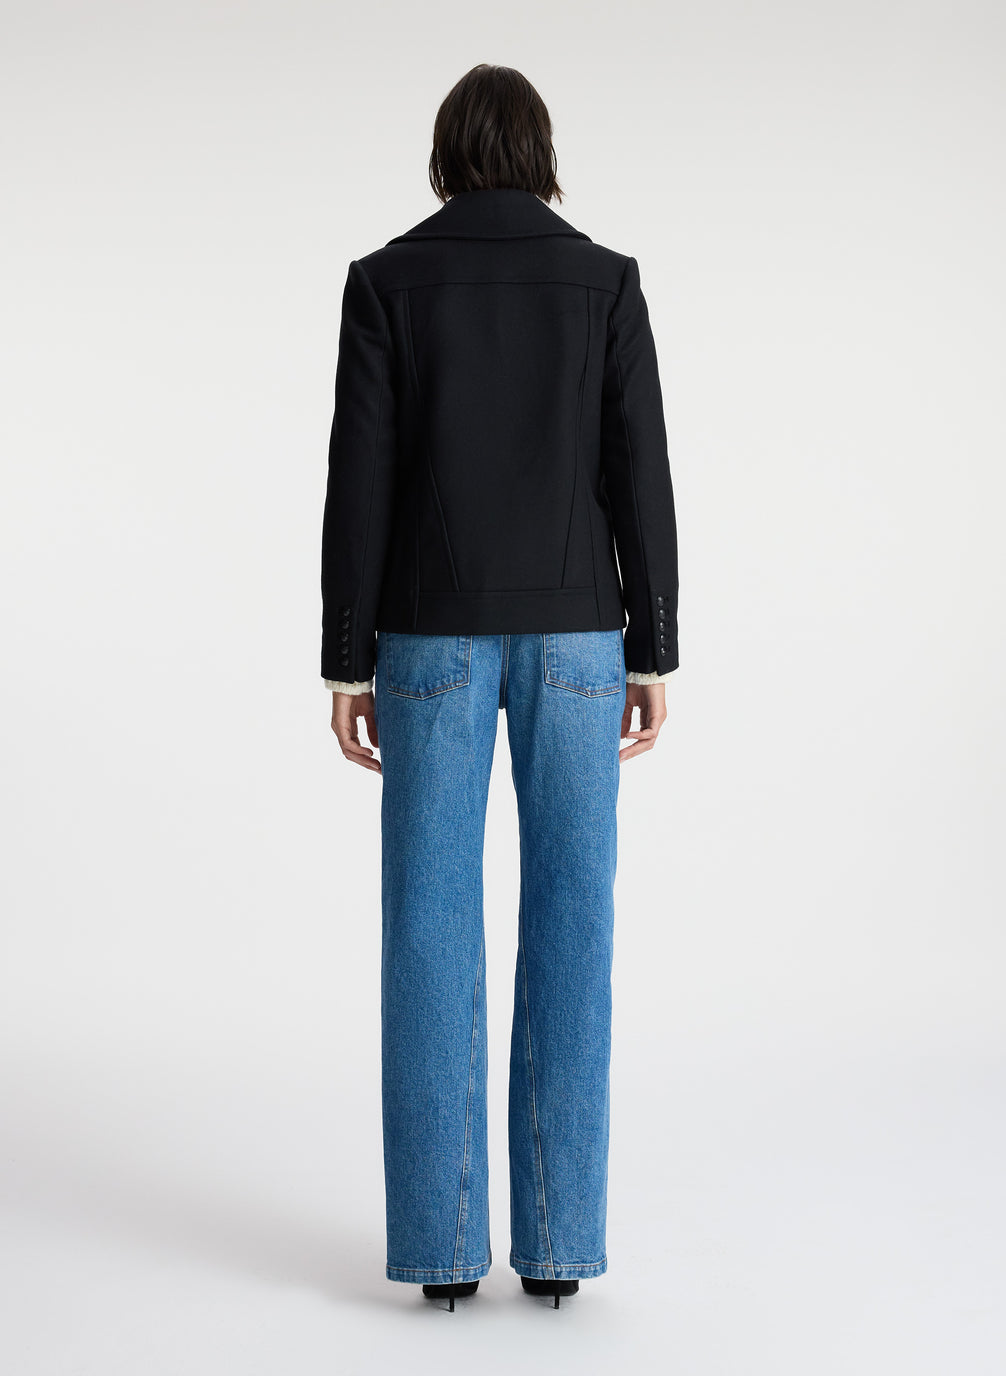 Kensington Wool Jacket